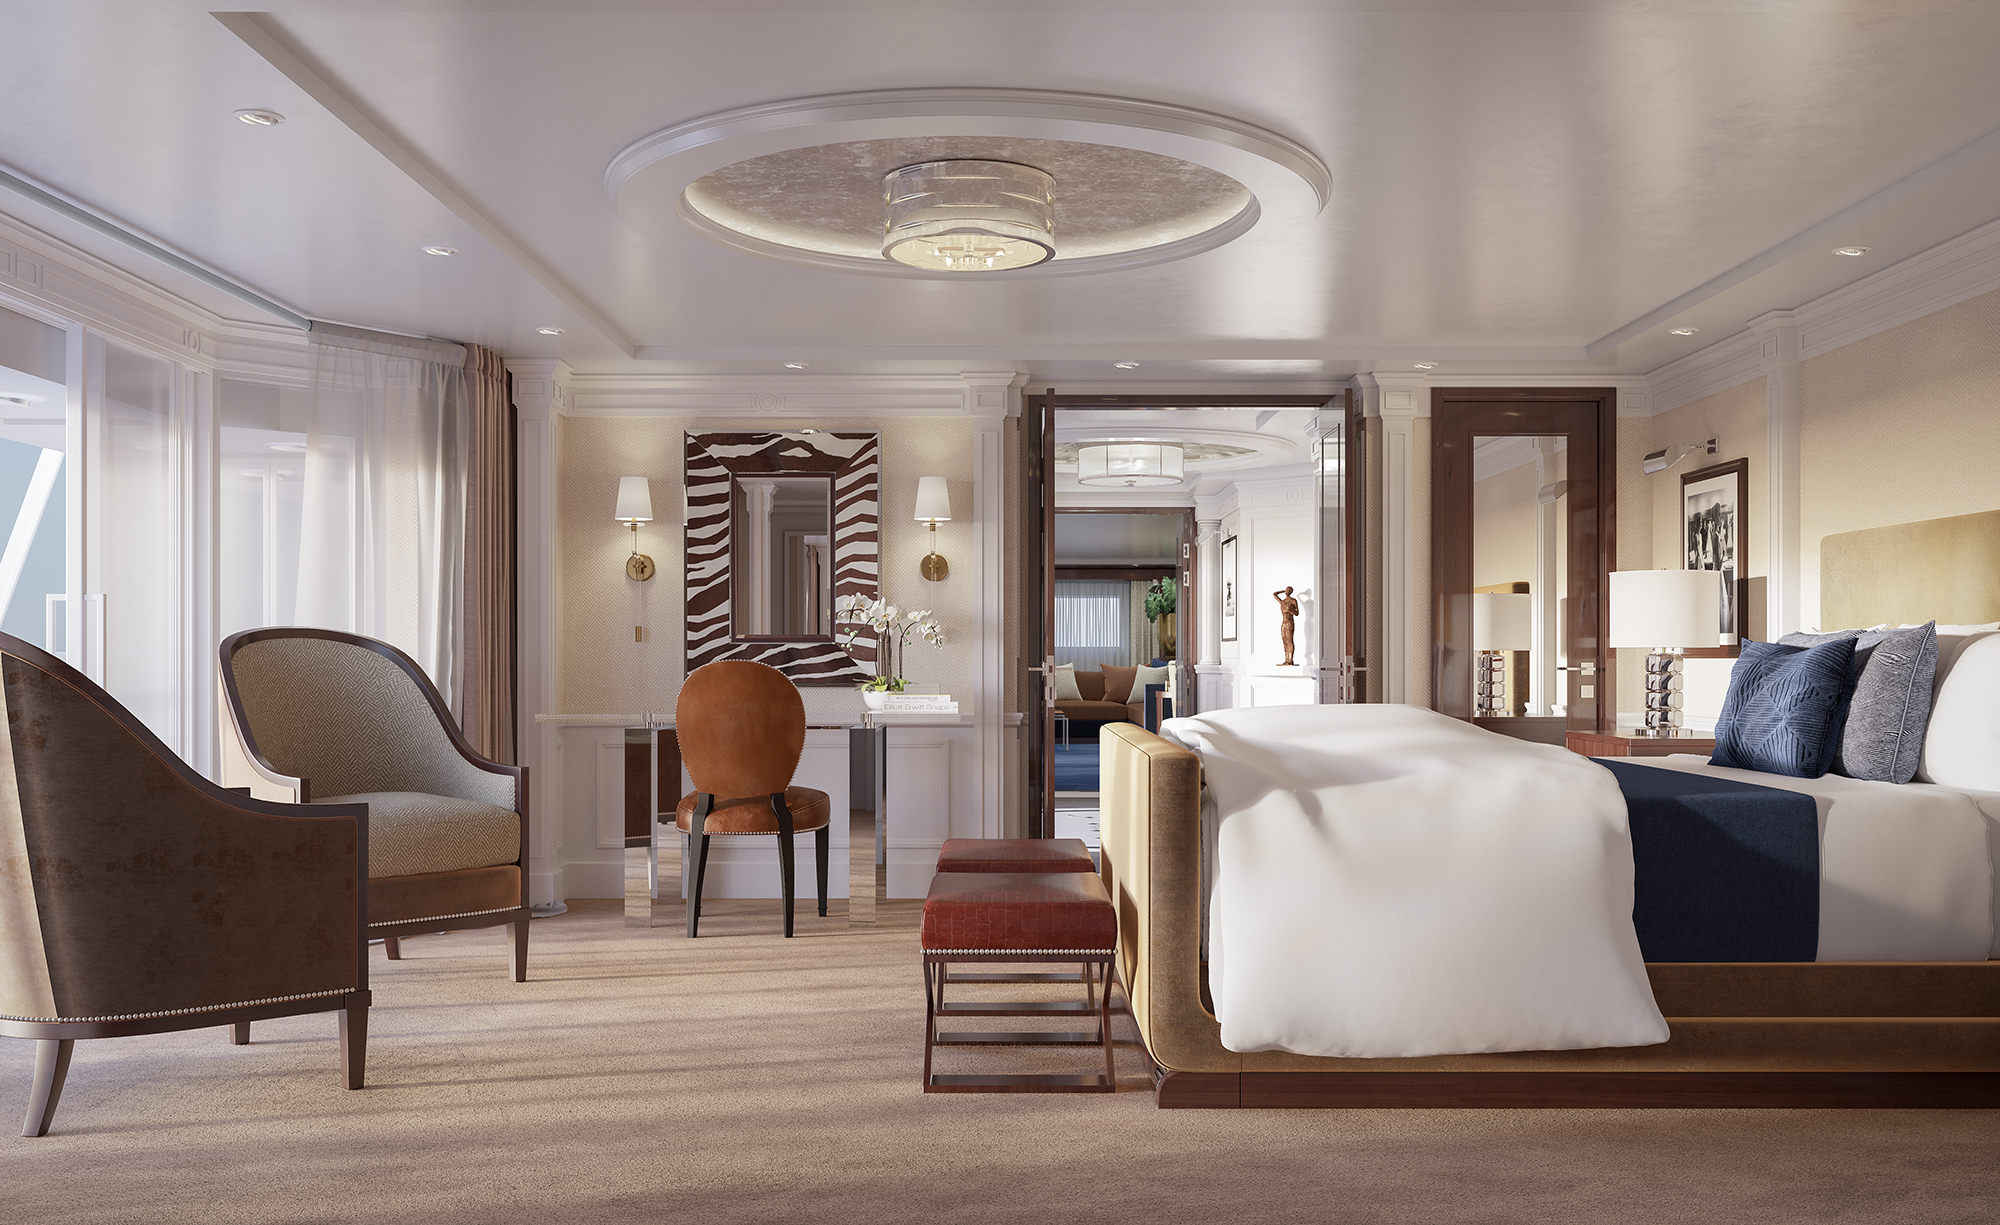 news-main-oceania-cruises-unveils-new-ralph-lauren-inspired-owners-suites.1539332636.jpg